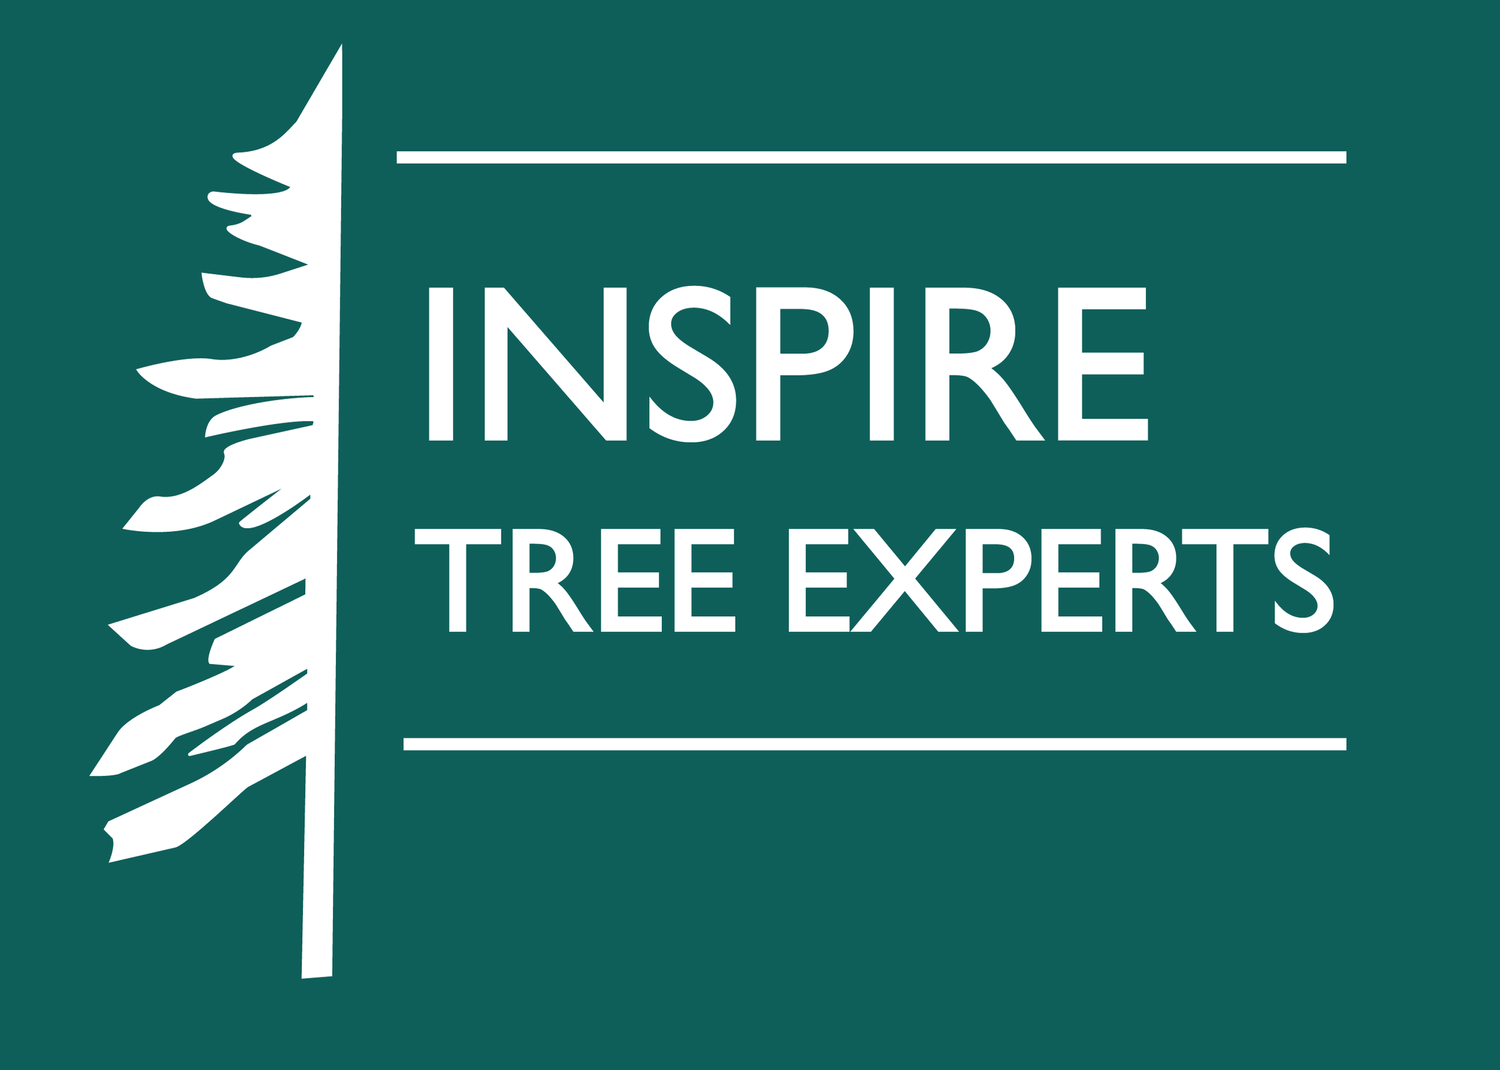 Inspire Tree Experts, Ypsilanti Ann Arbor tree service